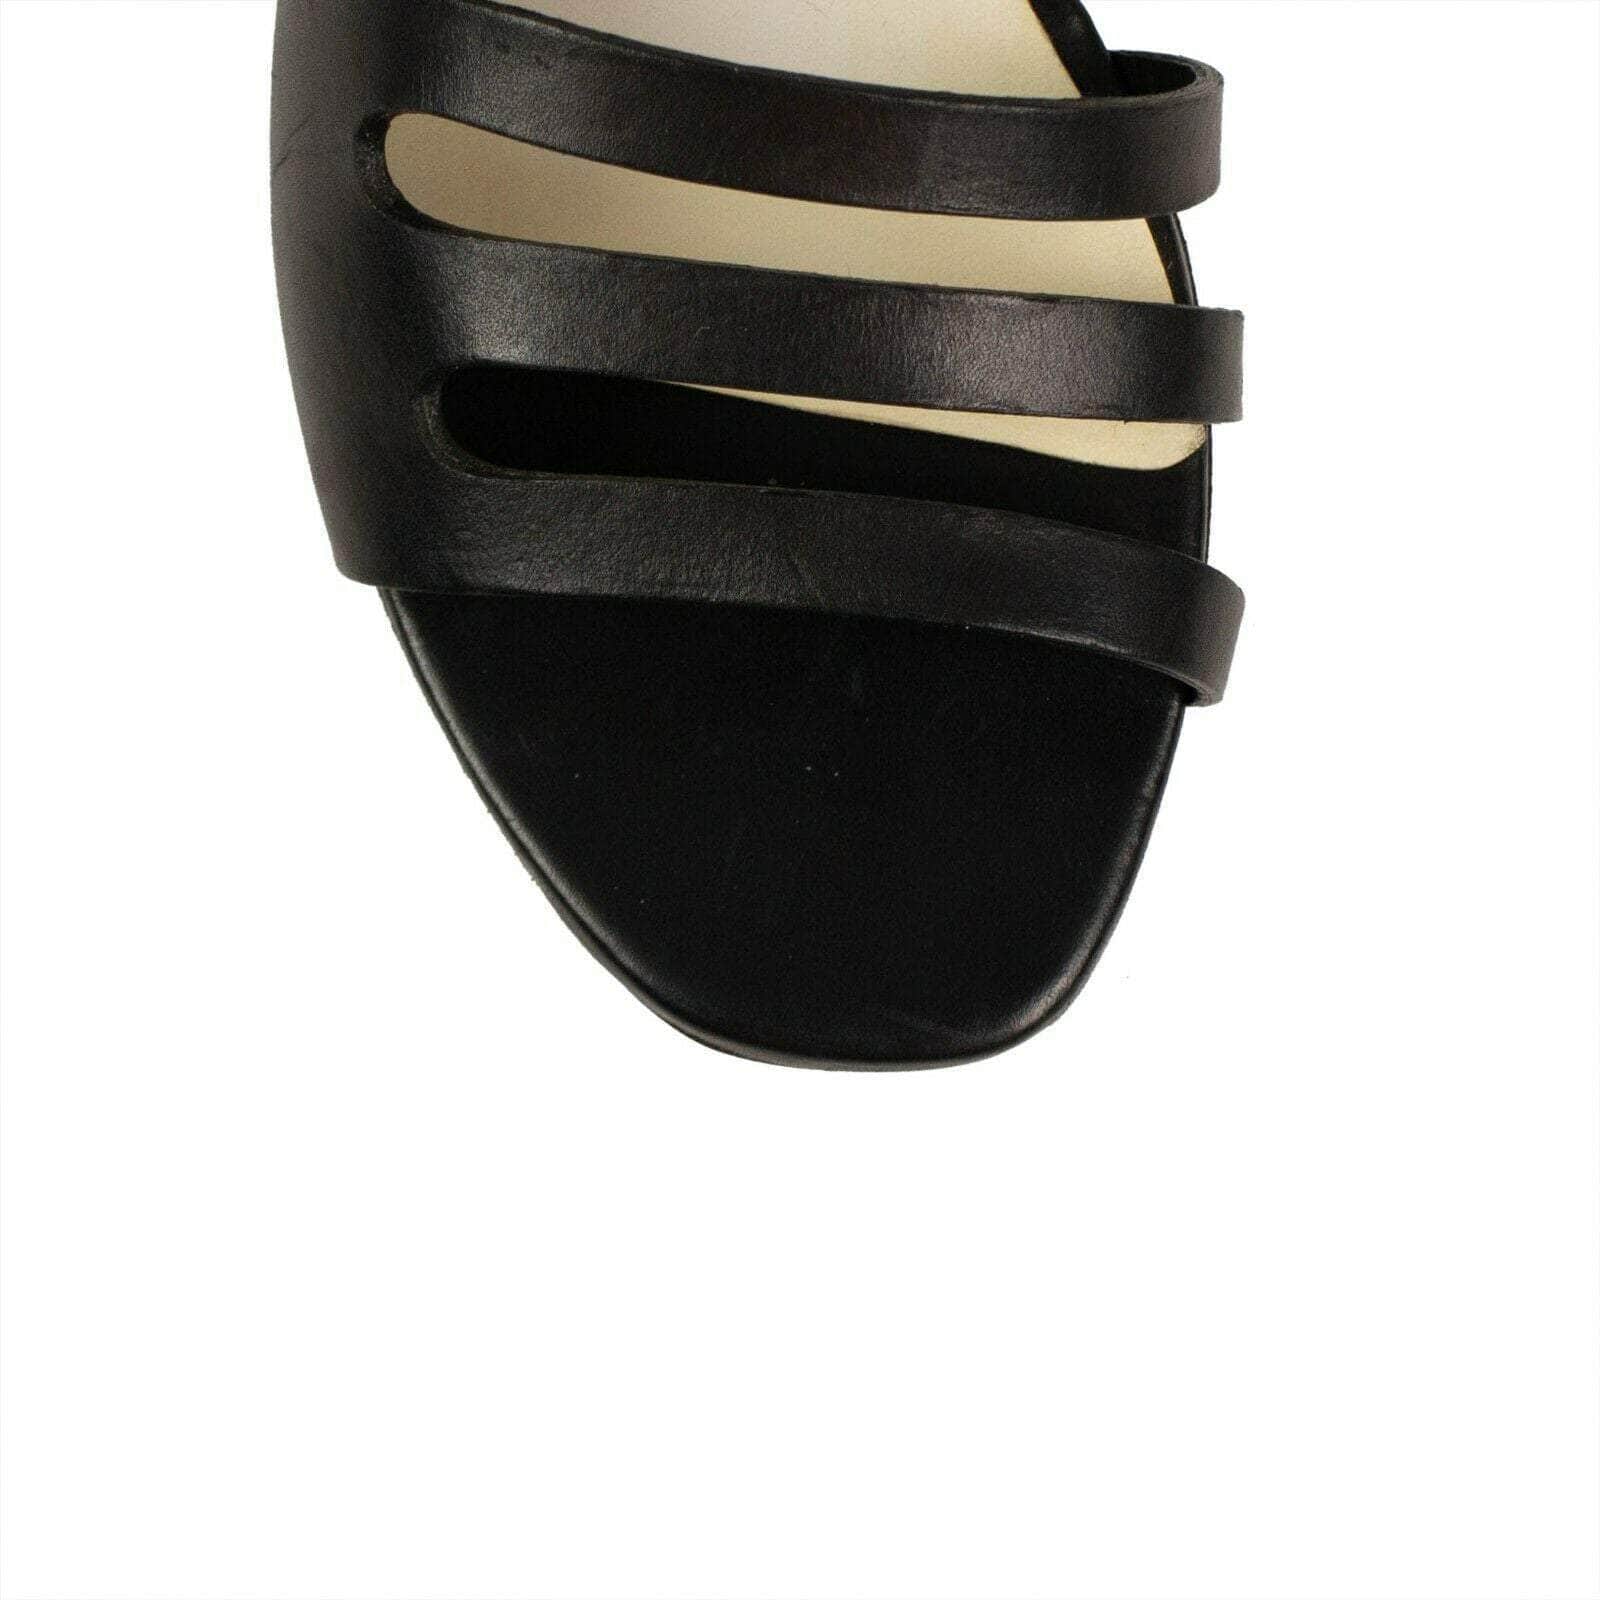 Marsell Sandals 35 EU Sandaletto Calf Skin Leather Heels Sandals - Black 69LE-2118/5 69LE-2118/5